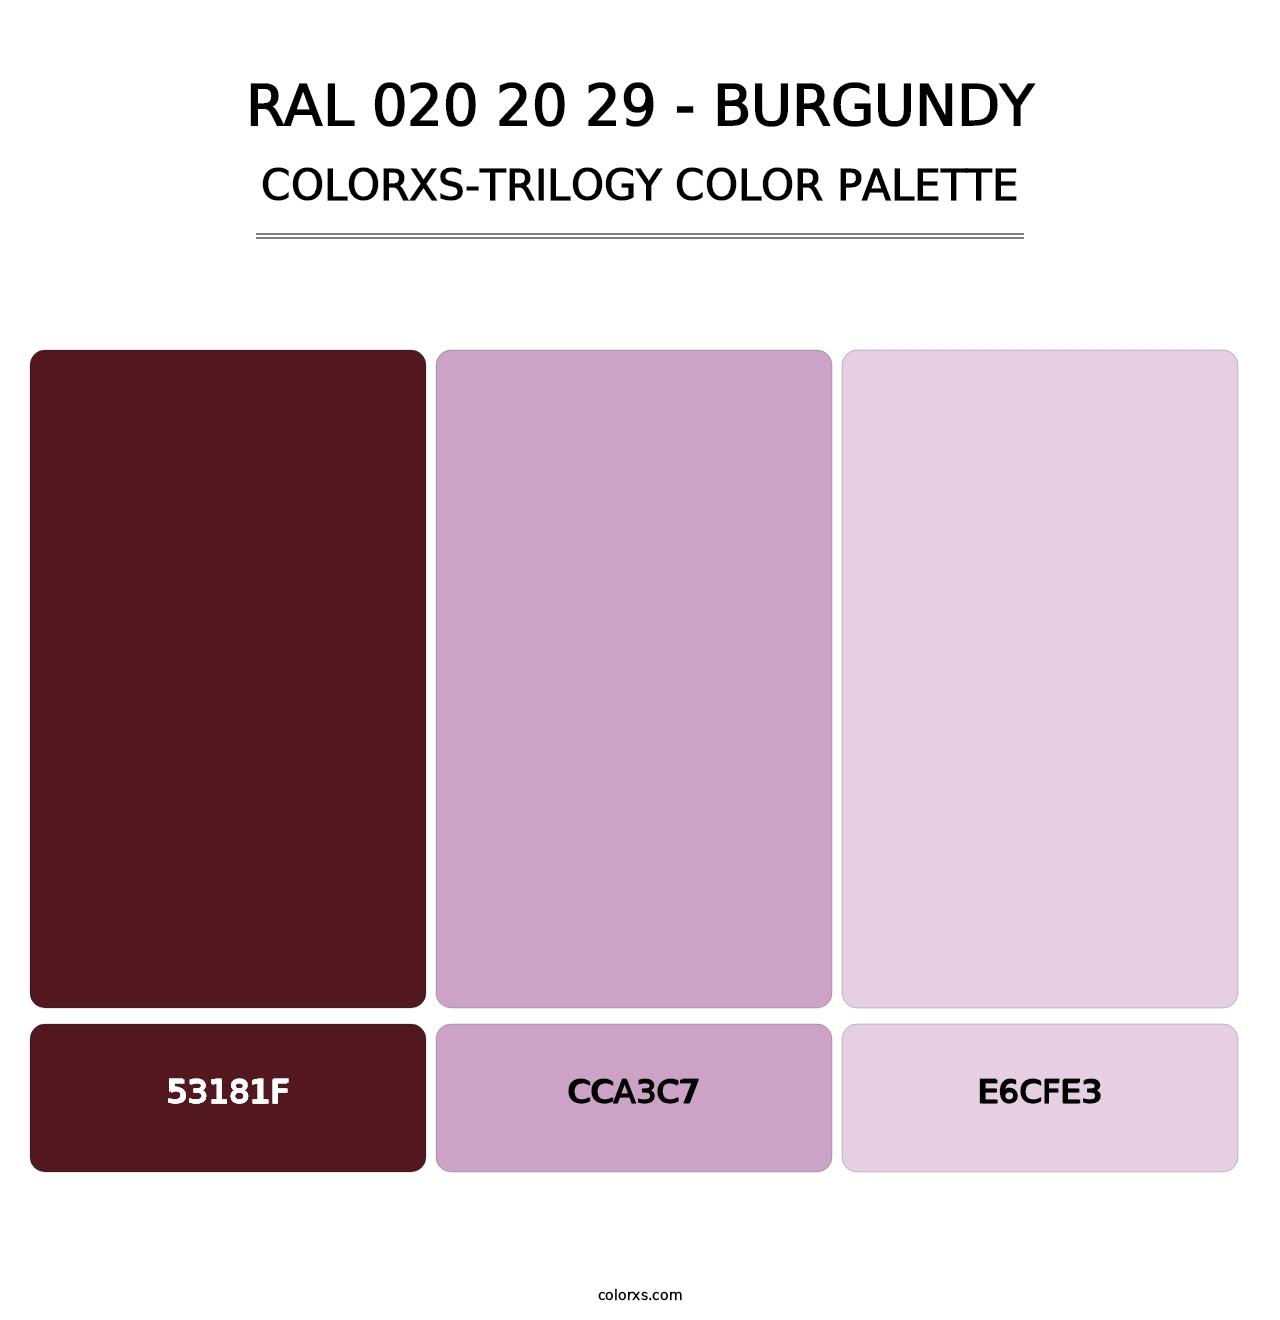 RAL 020 20 29 - Burgundy - Colorxs Trilogy Palette